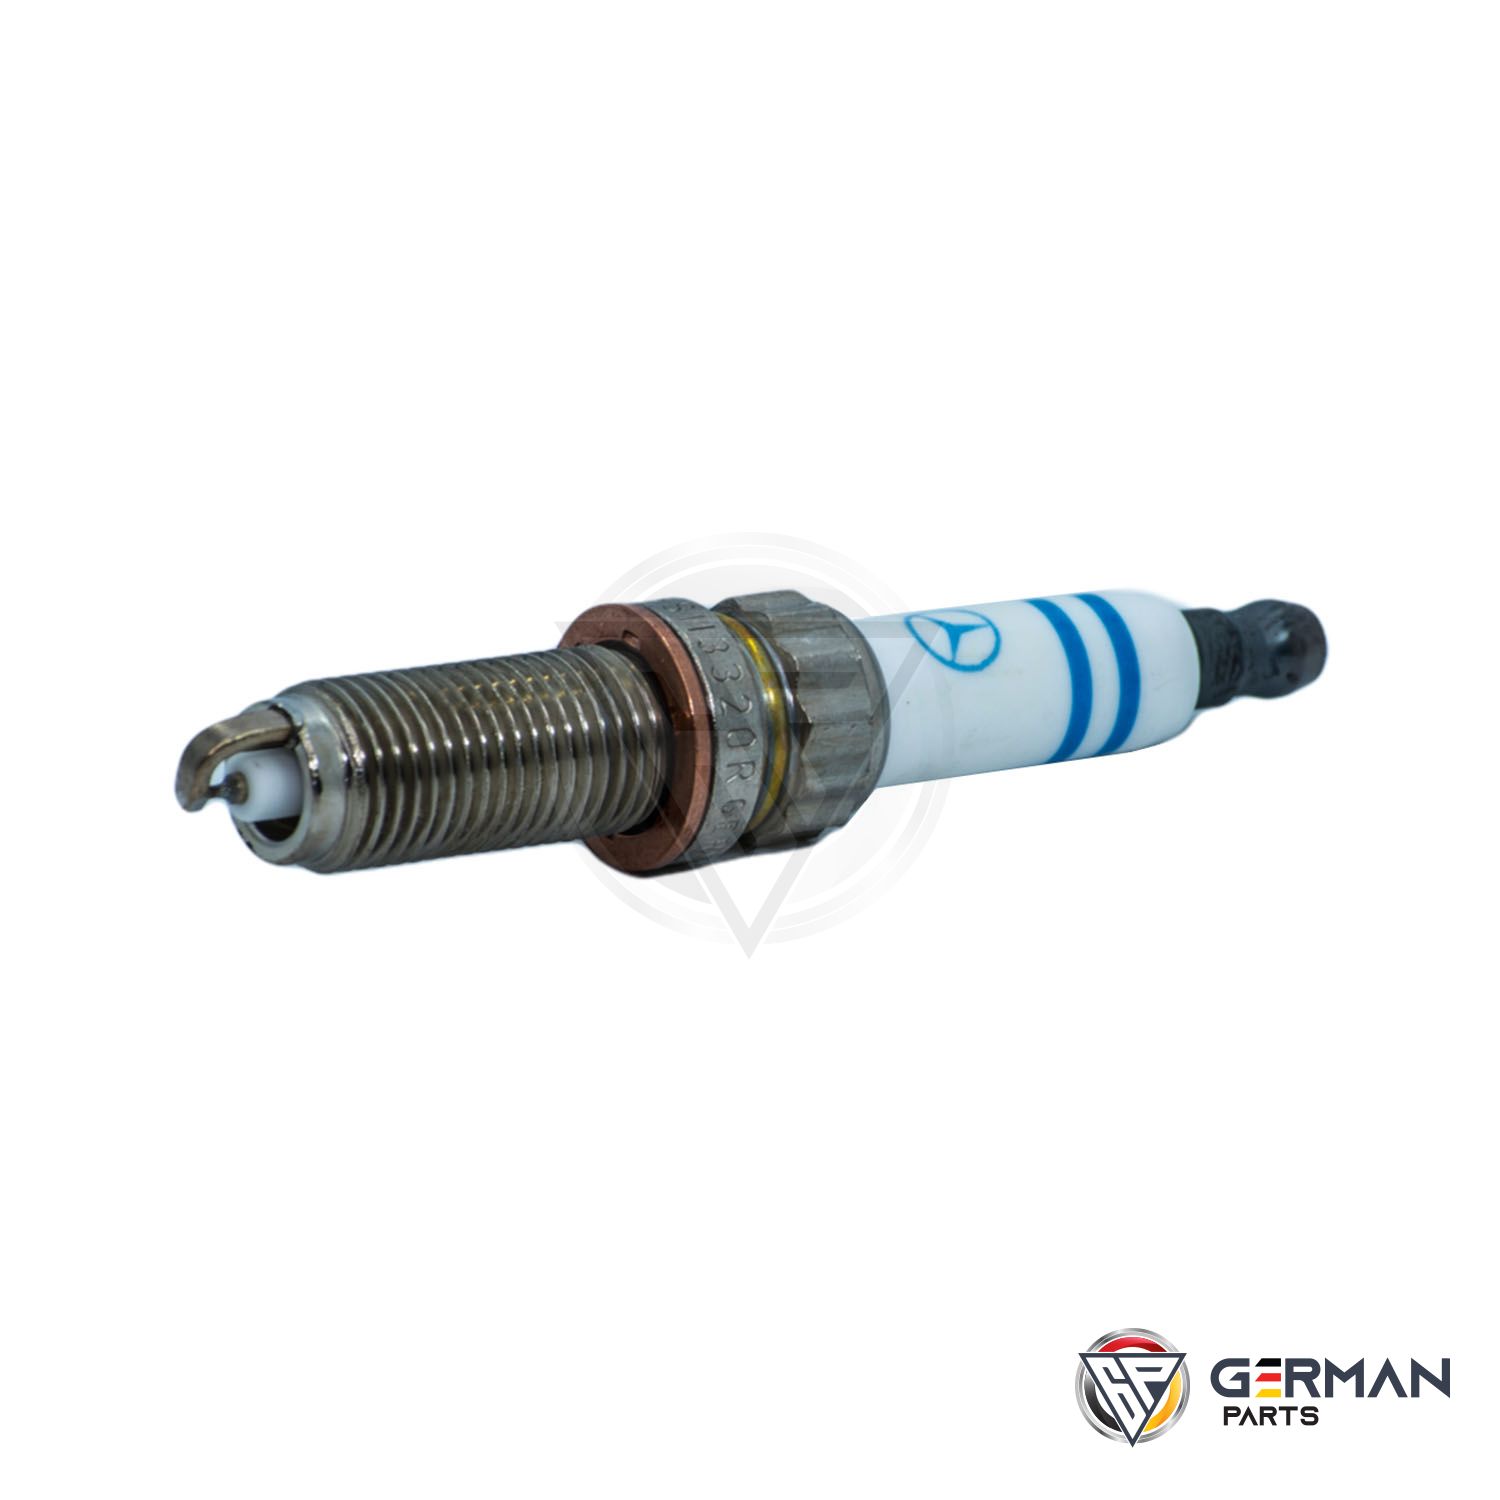 Buy Mercedes Benz Spark Plug 0041598103 - German Parts